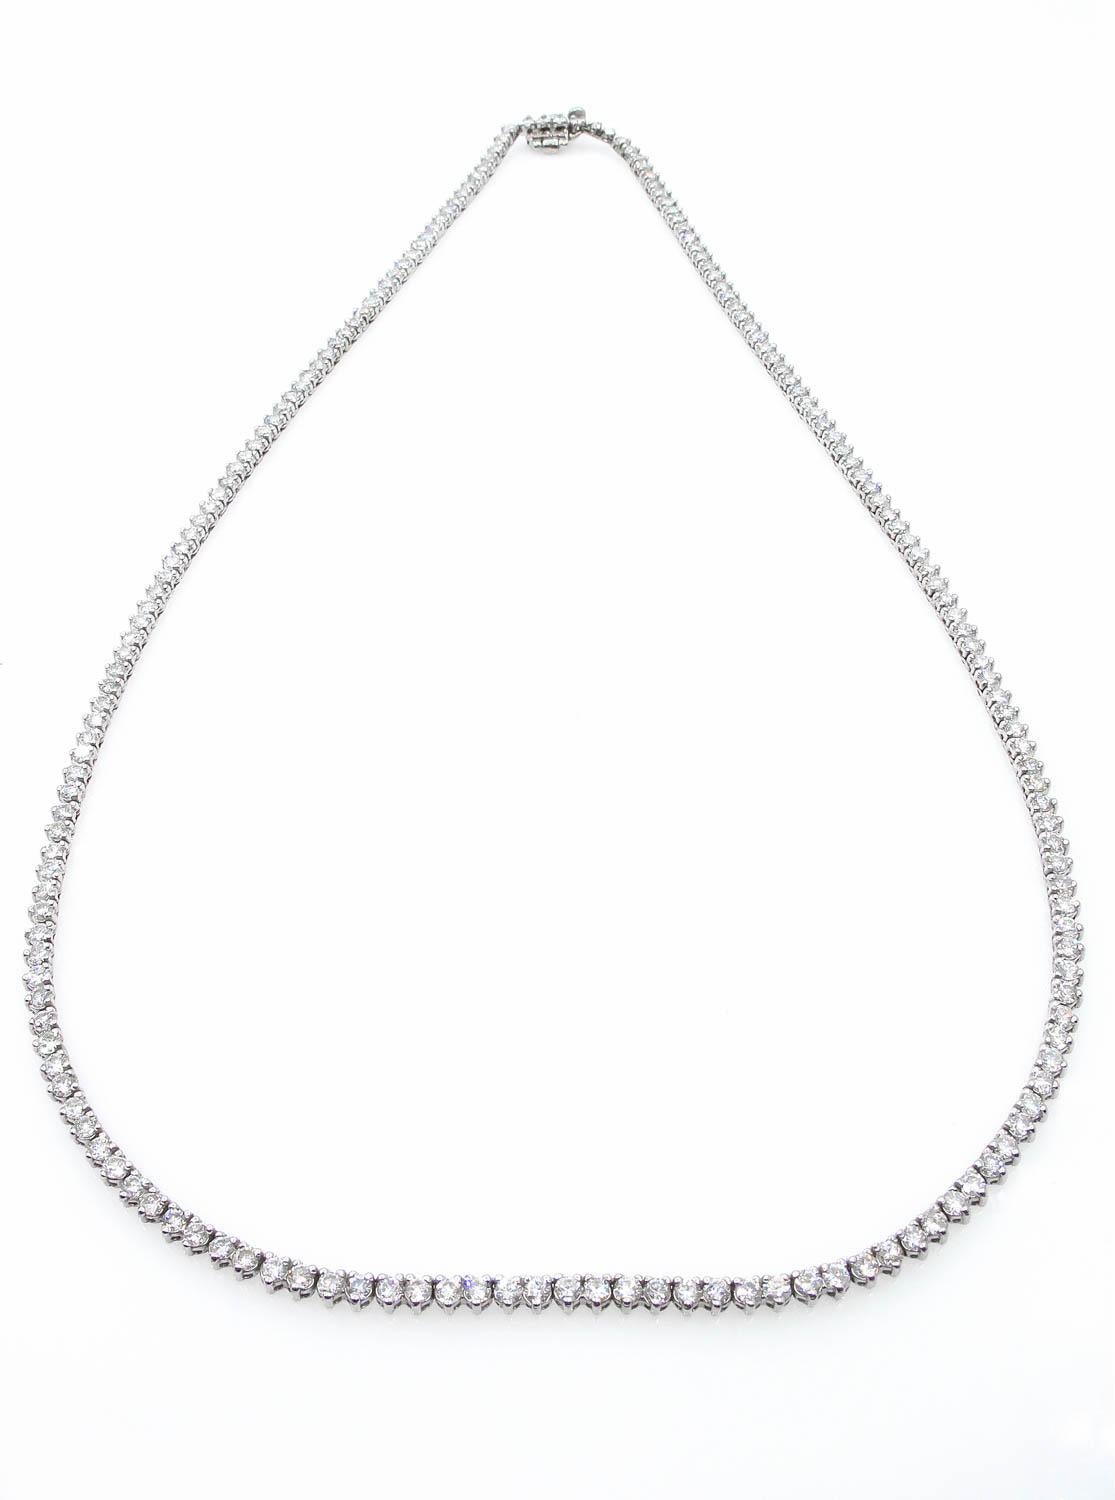 7.50 Carat Round Diamond Tennis Necklace in White Gold 1